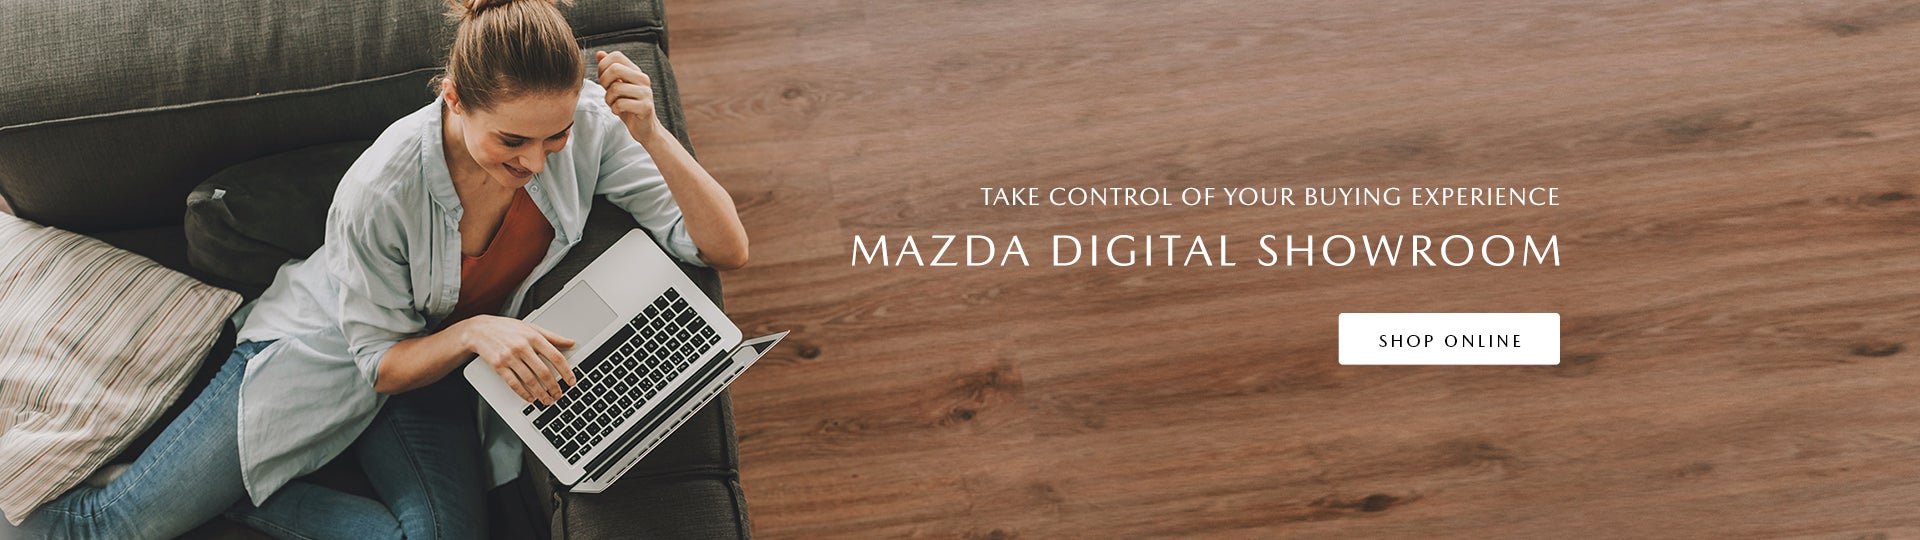 Mazda Digital Showroom - Buy Online